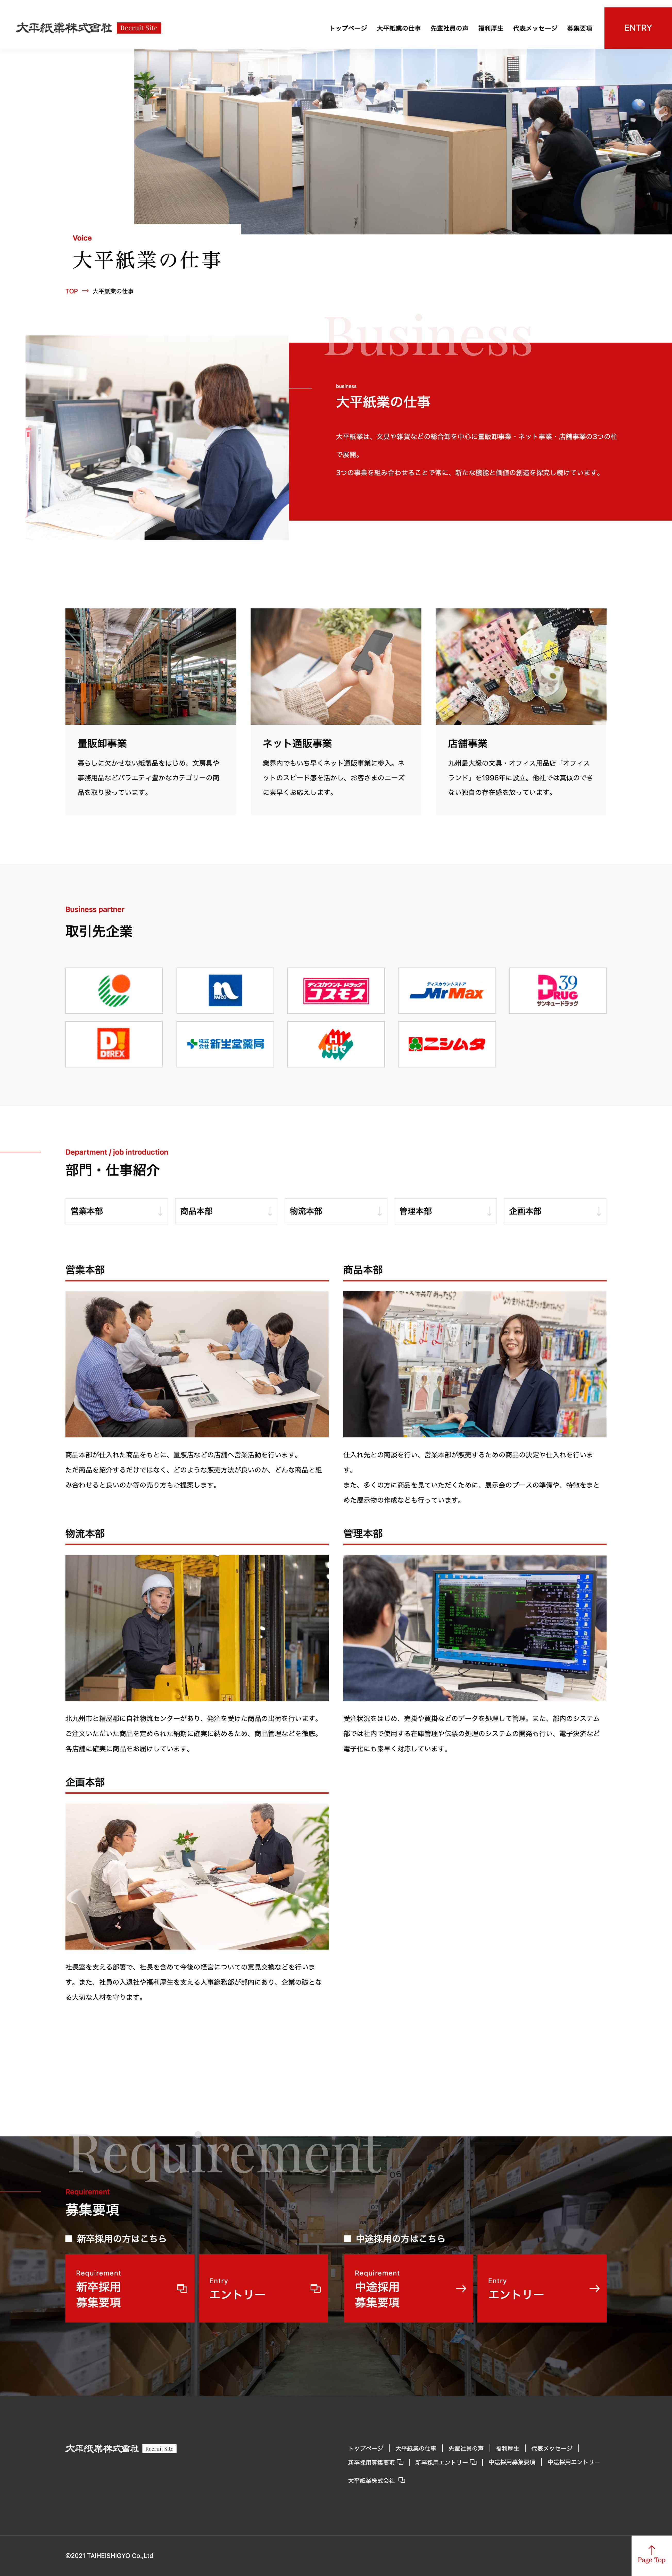 大平紙業株式会社様 採用サイト desktop image